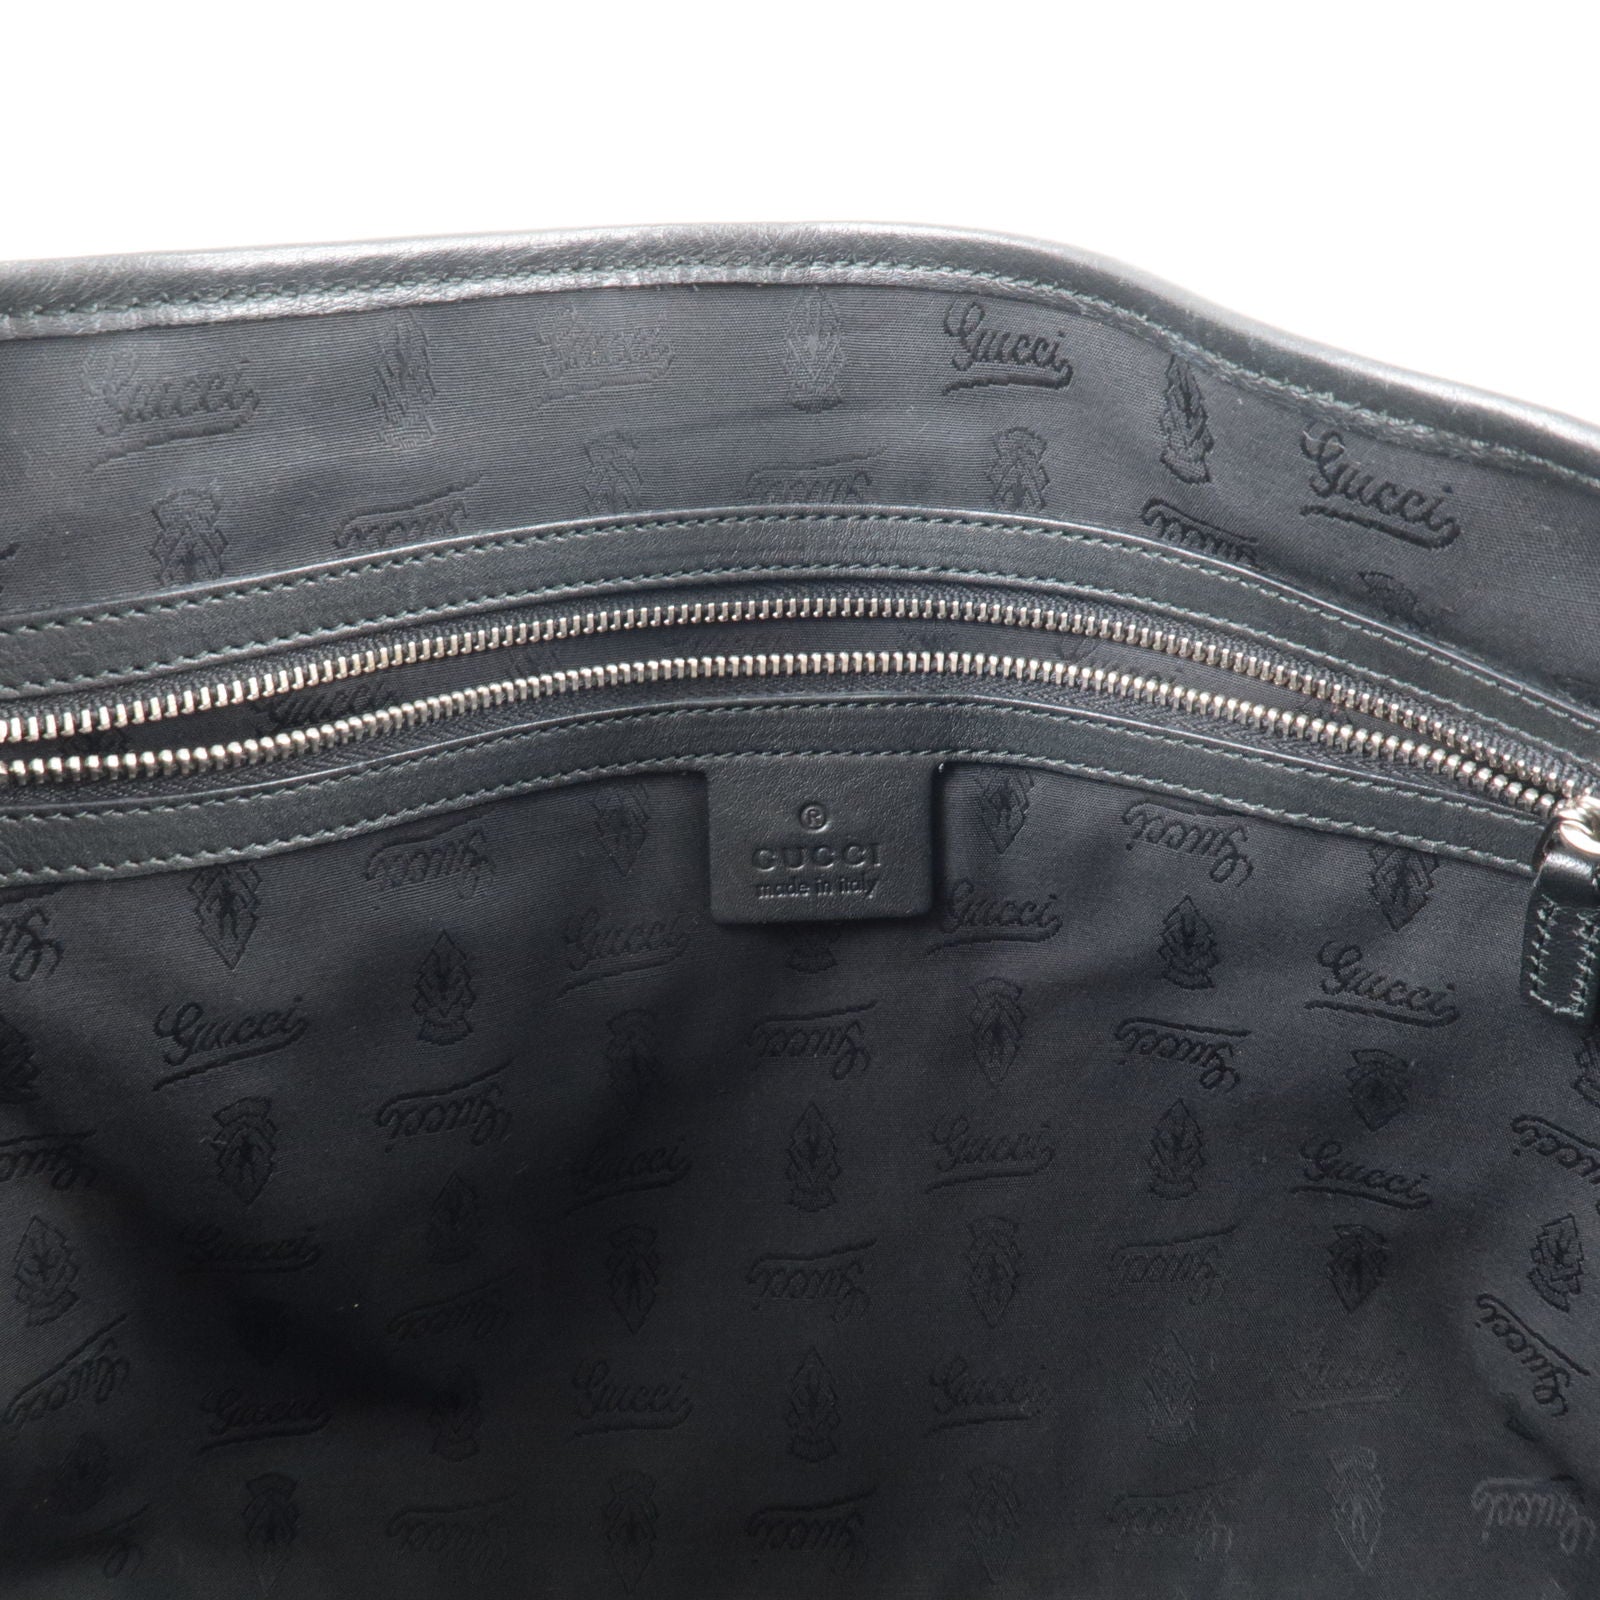 SUSAN LUCCI ITALY CREAM BEIGE CROCO GENUINE LEATHER HANDBAG POCKETBOOK  CLUTCH | Genuine leather handbag, Genuine leather, Handbag